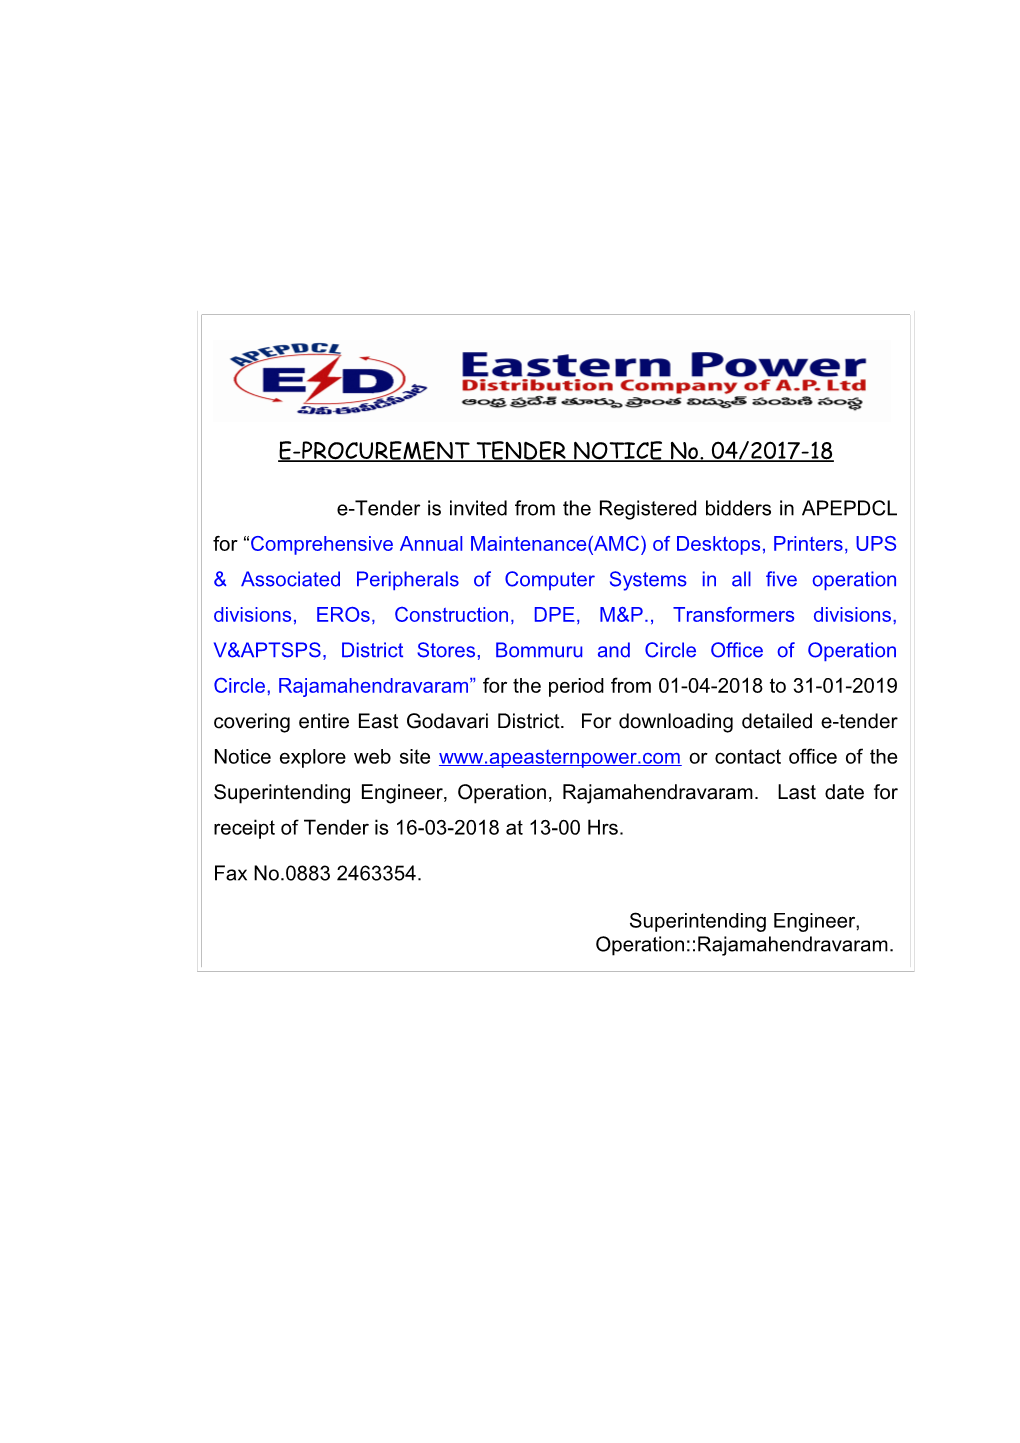 Eastern Power Distribution Compnay of Andhra Pradesh Limited